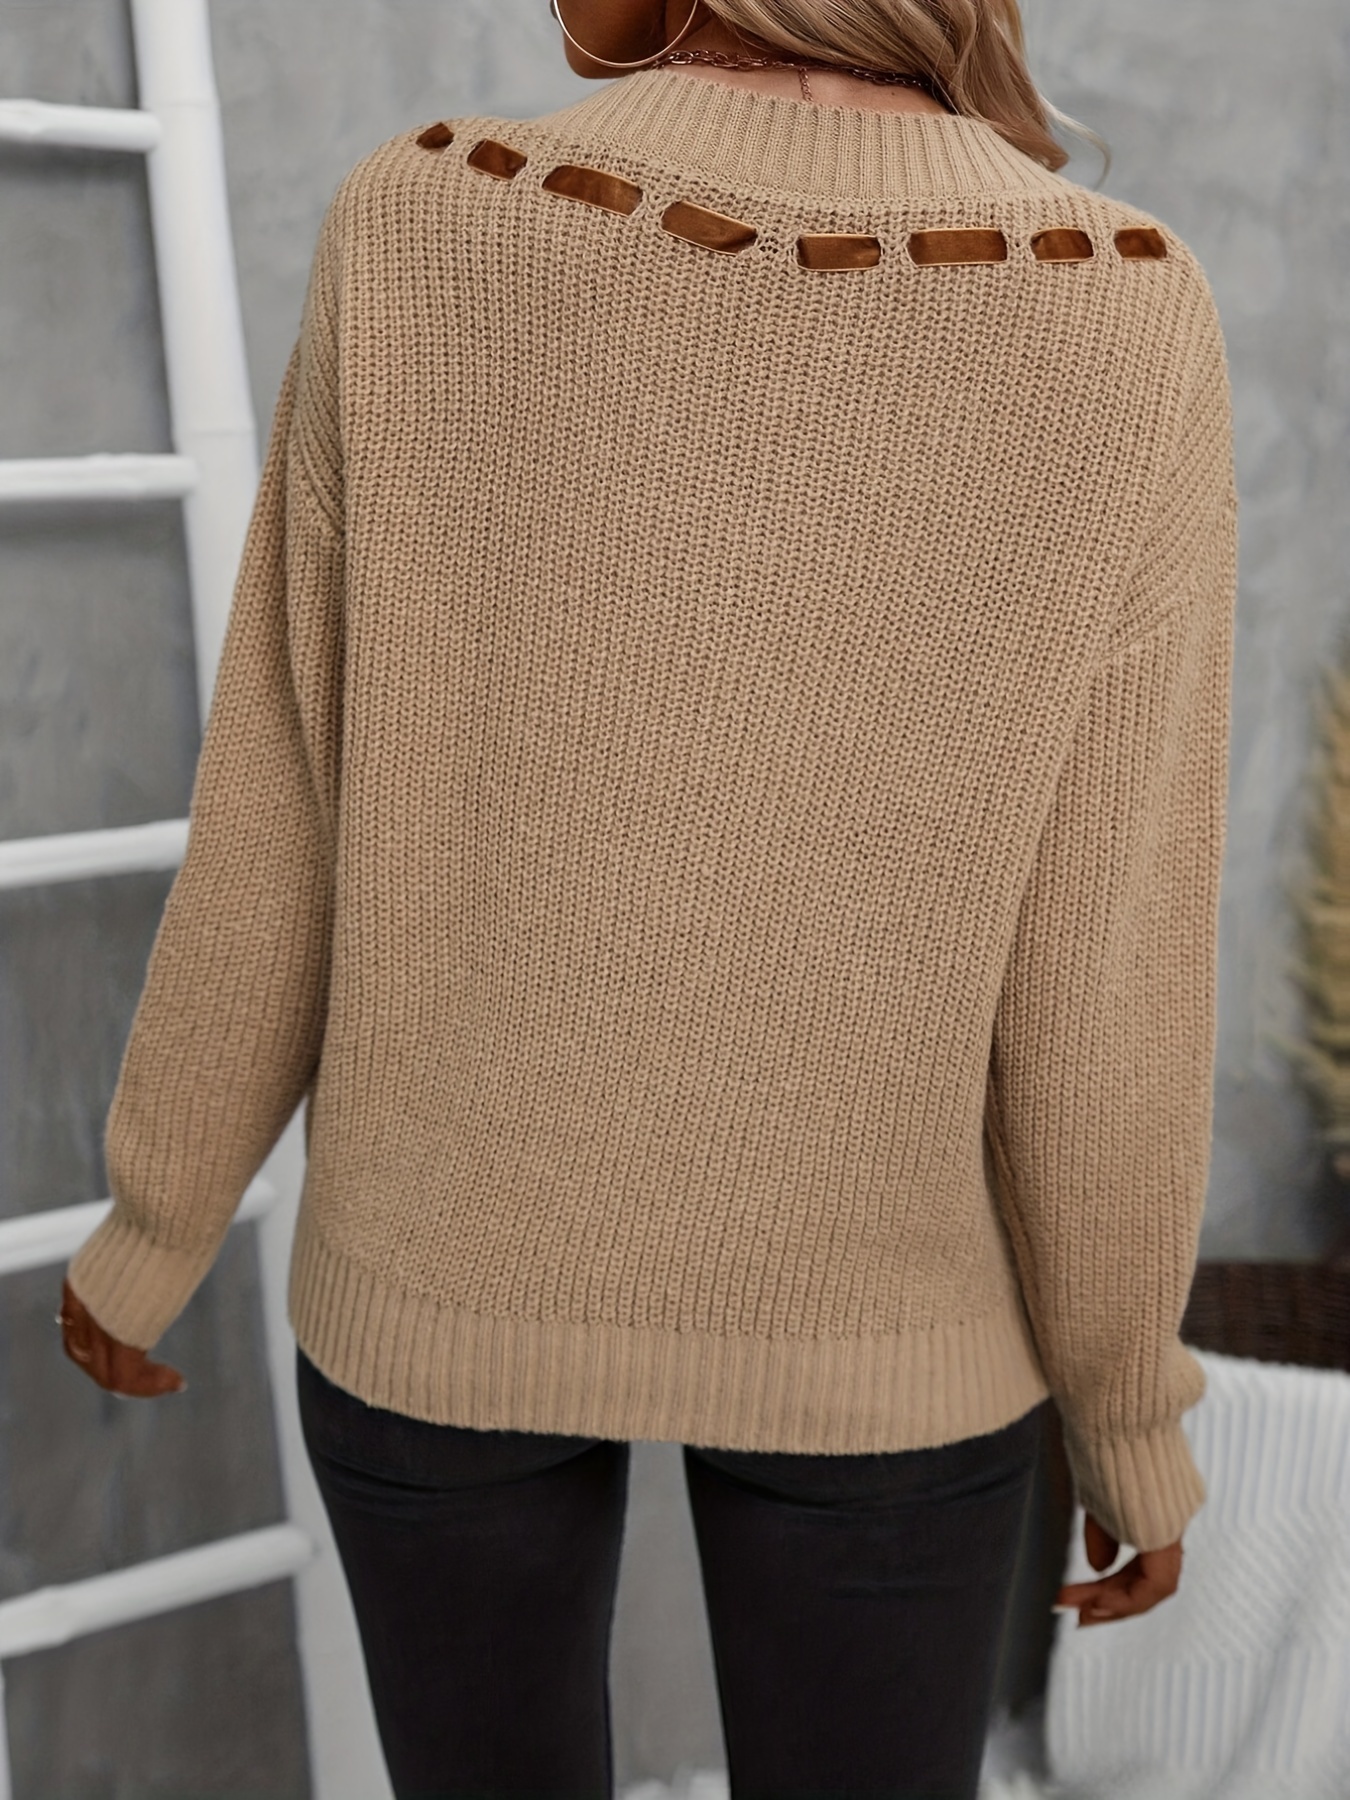 Suéter De punto De manga larga para Mujer, jersey liso, Moda